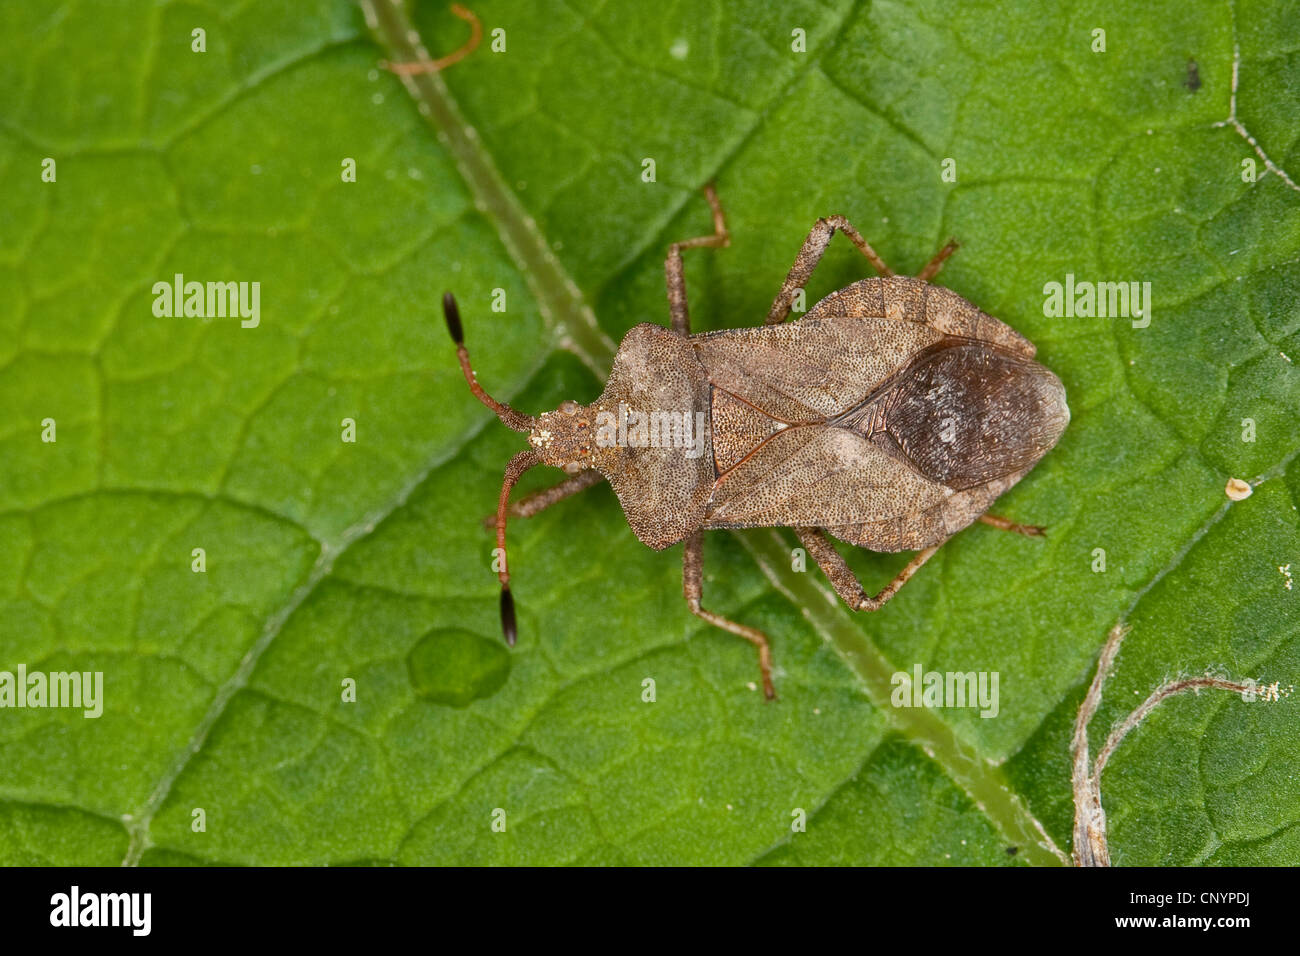 squash bug (Coreus marginatus, Mesocerus marginatus), mating, Germany Stock Photo